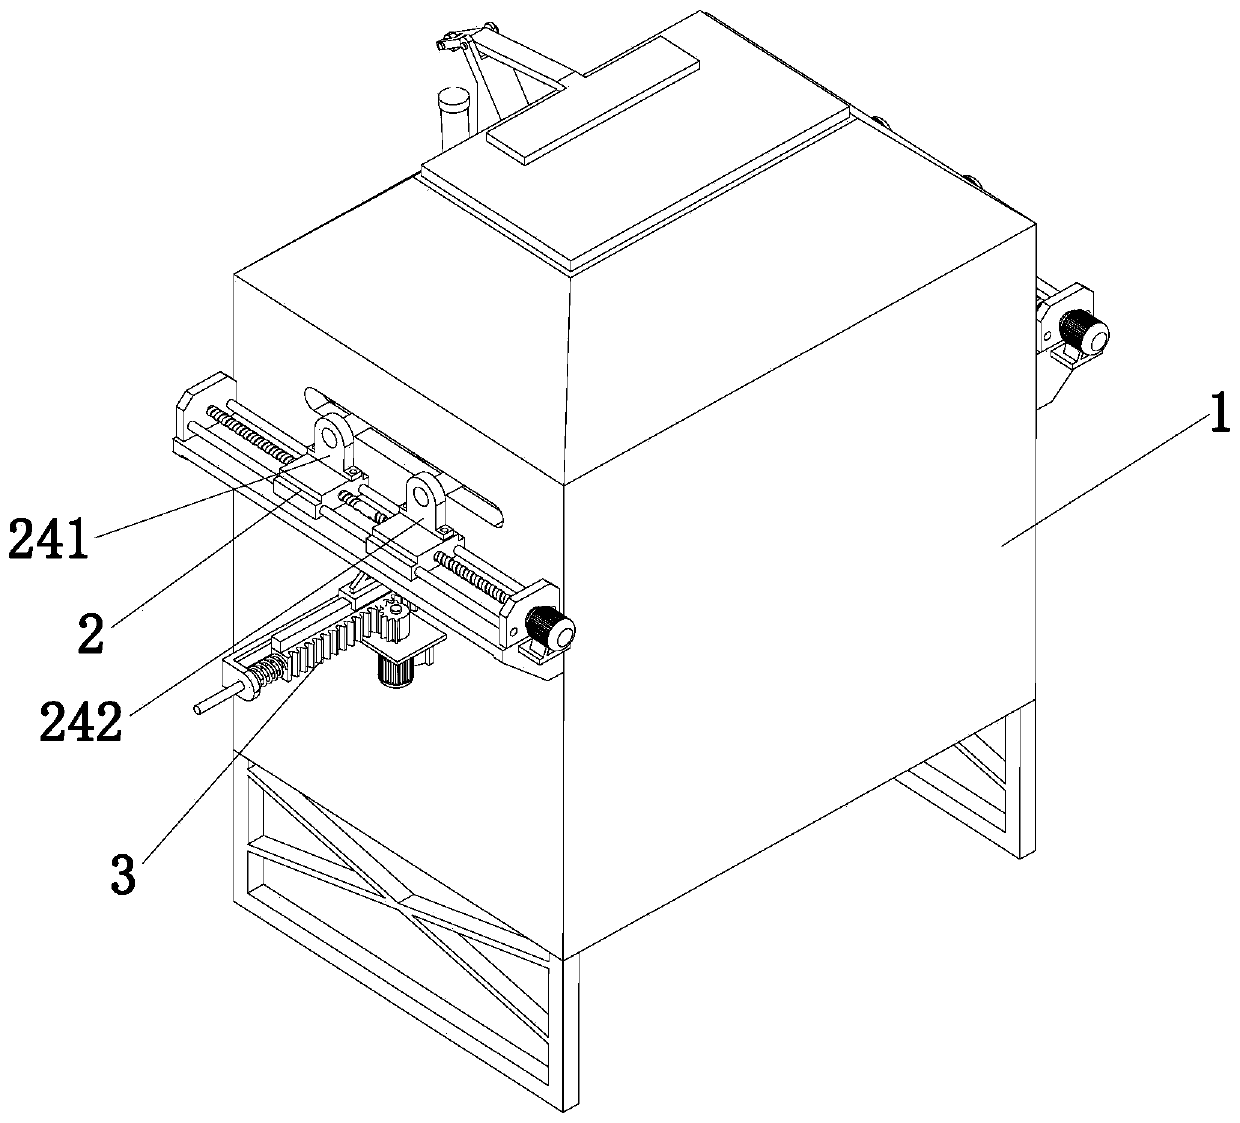 Novel injection molding and storage device of injection molding machine